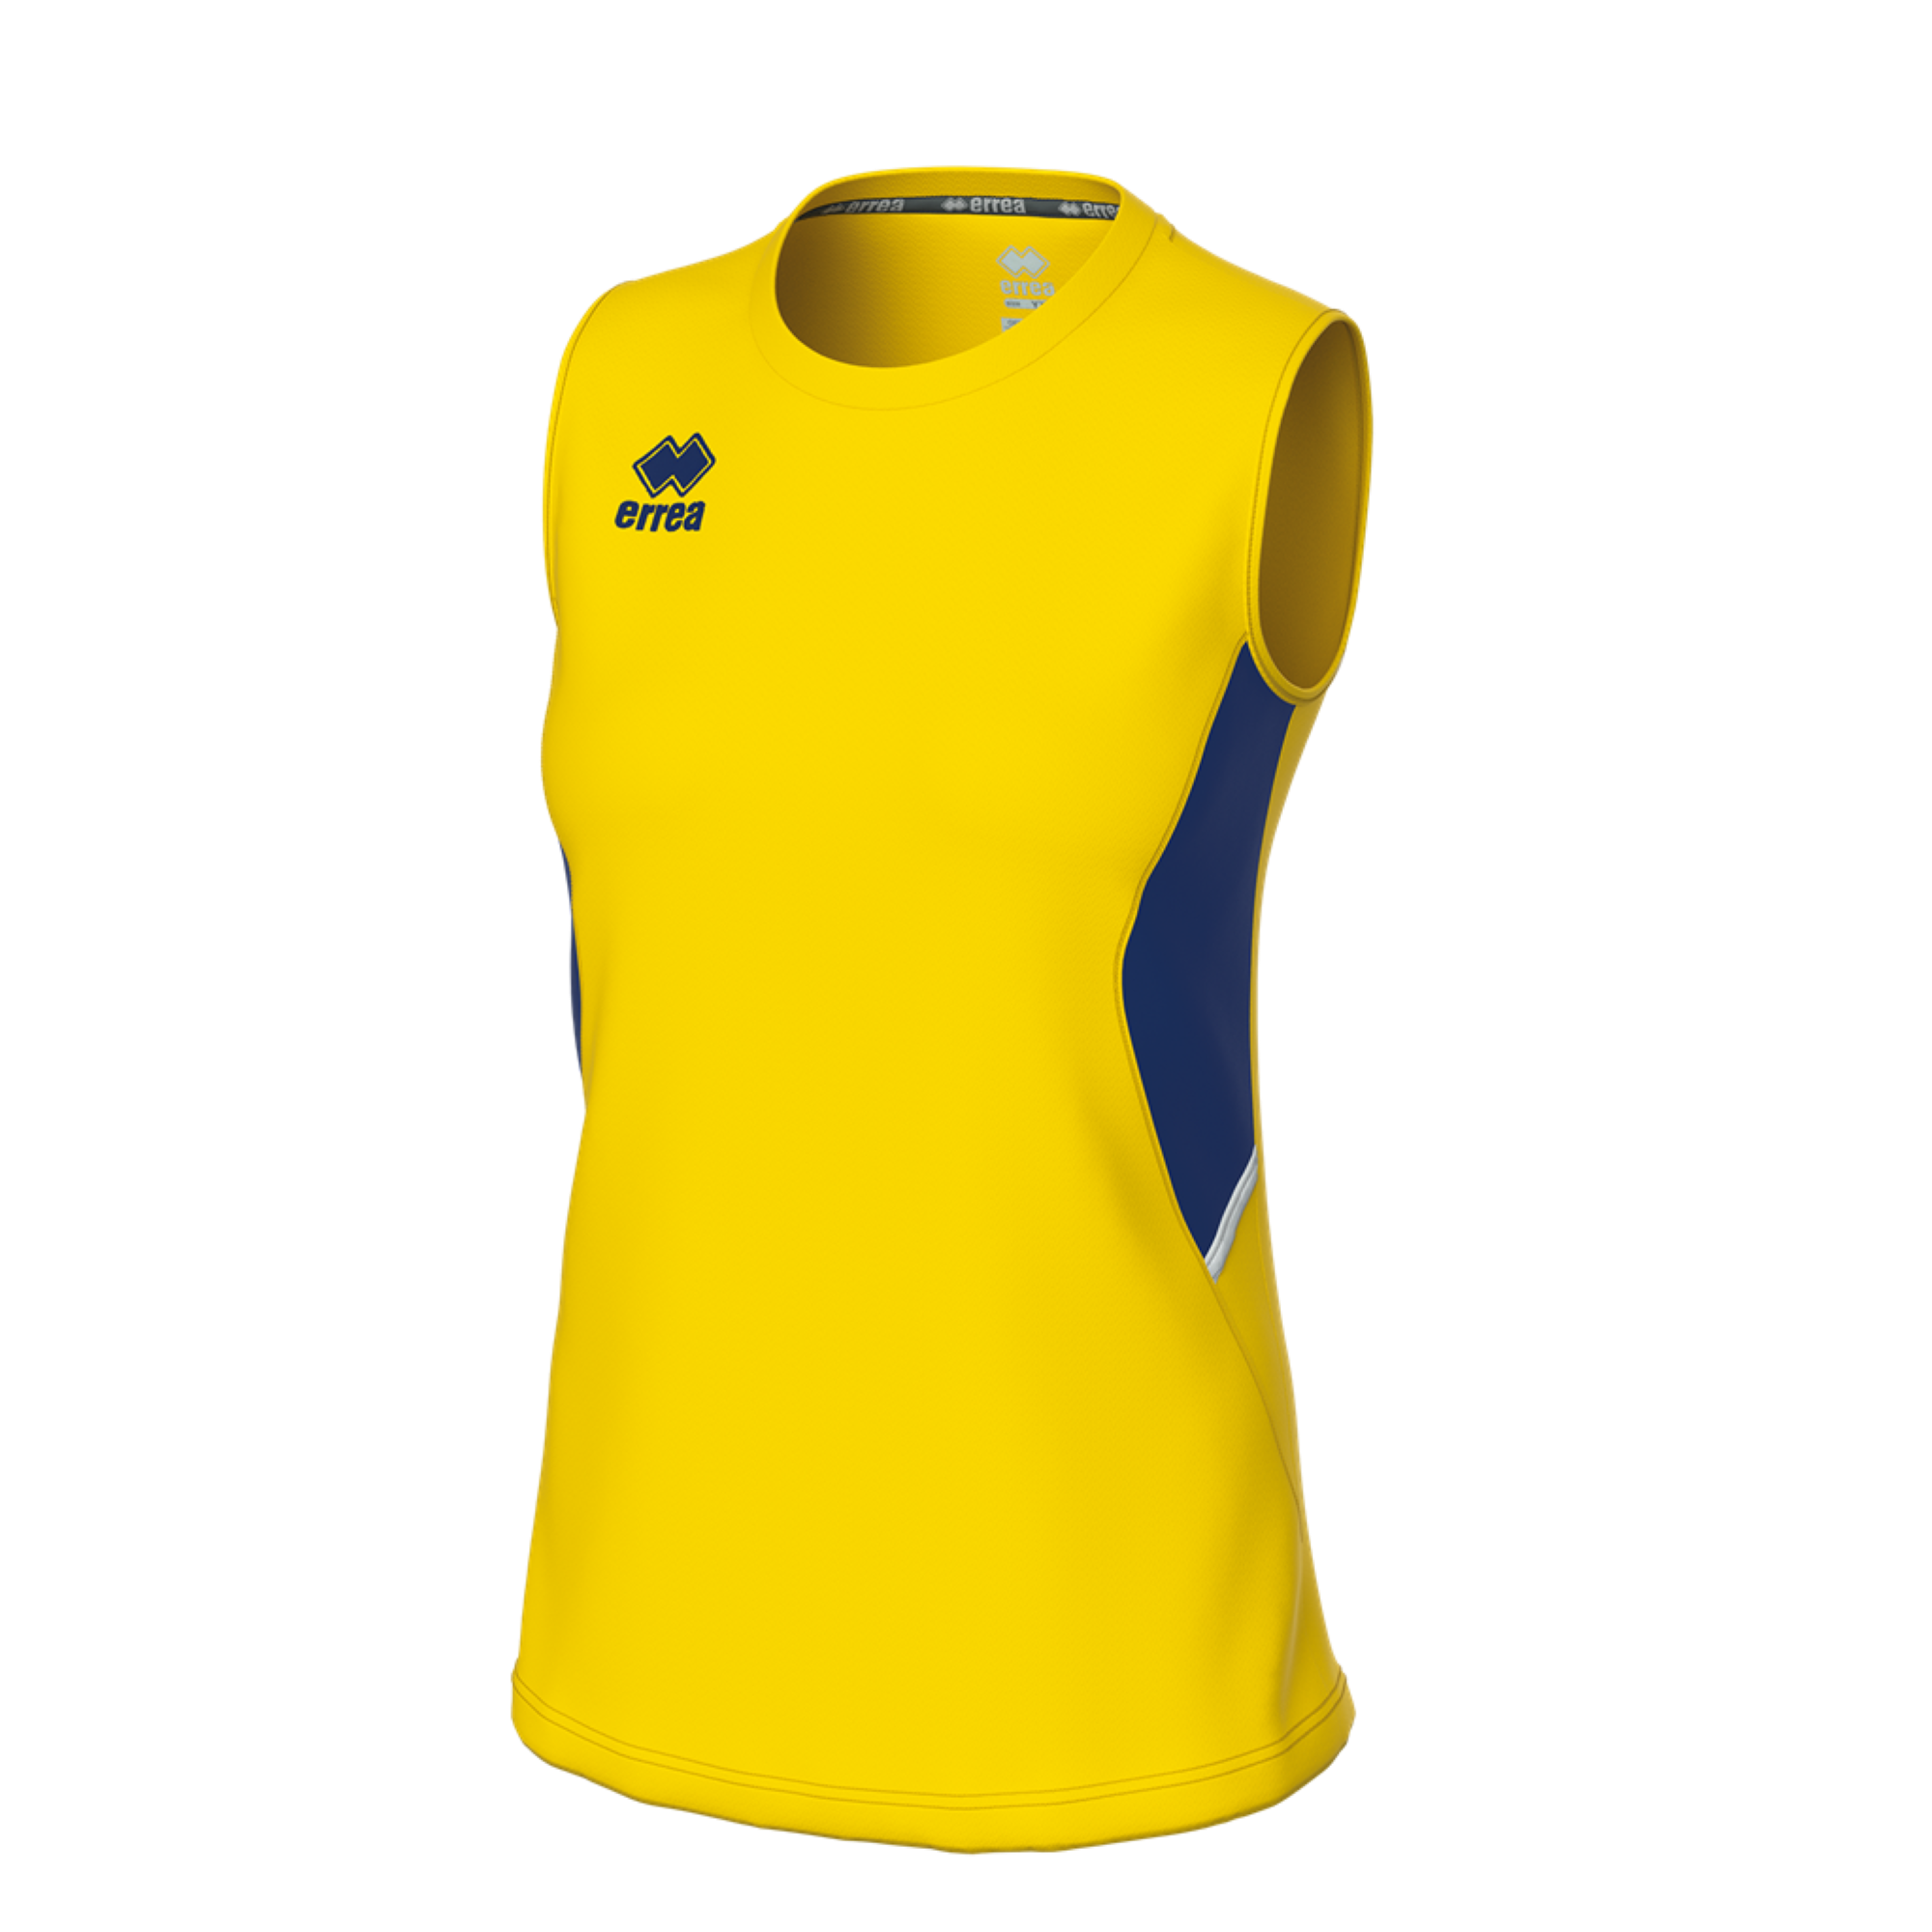 ERREA dámské dresové triko CARRY BARVA: žlutá - modrá - bílá, Velikost: M